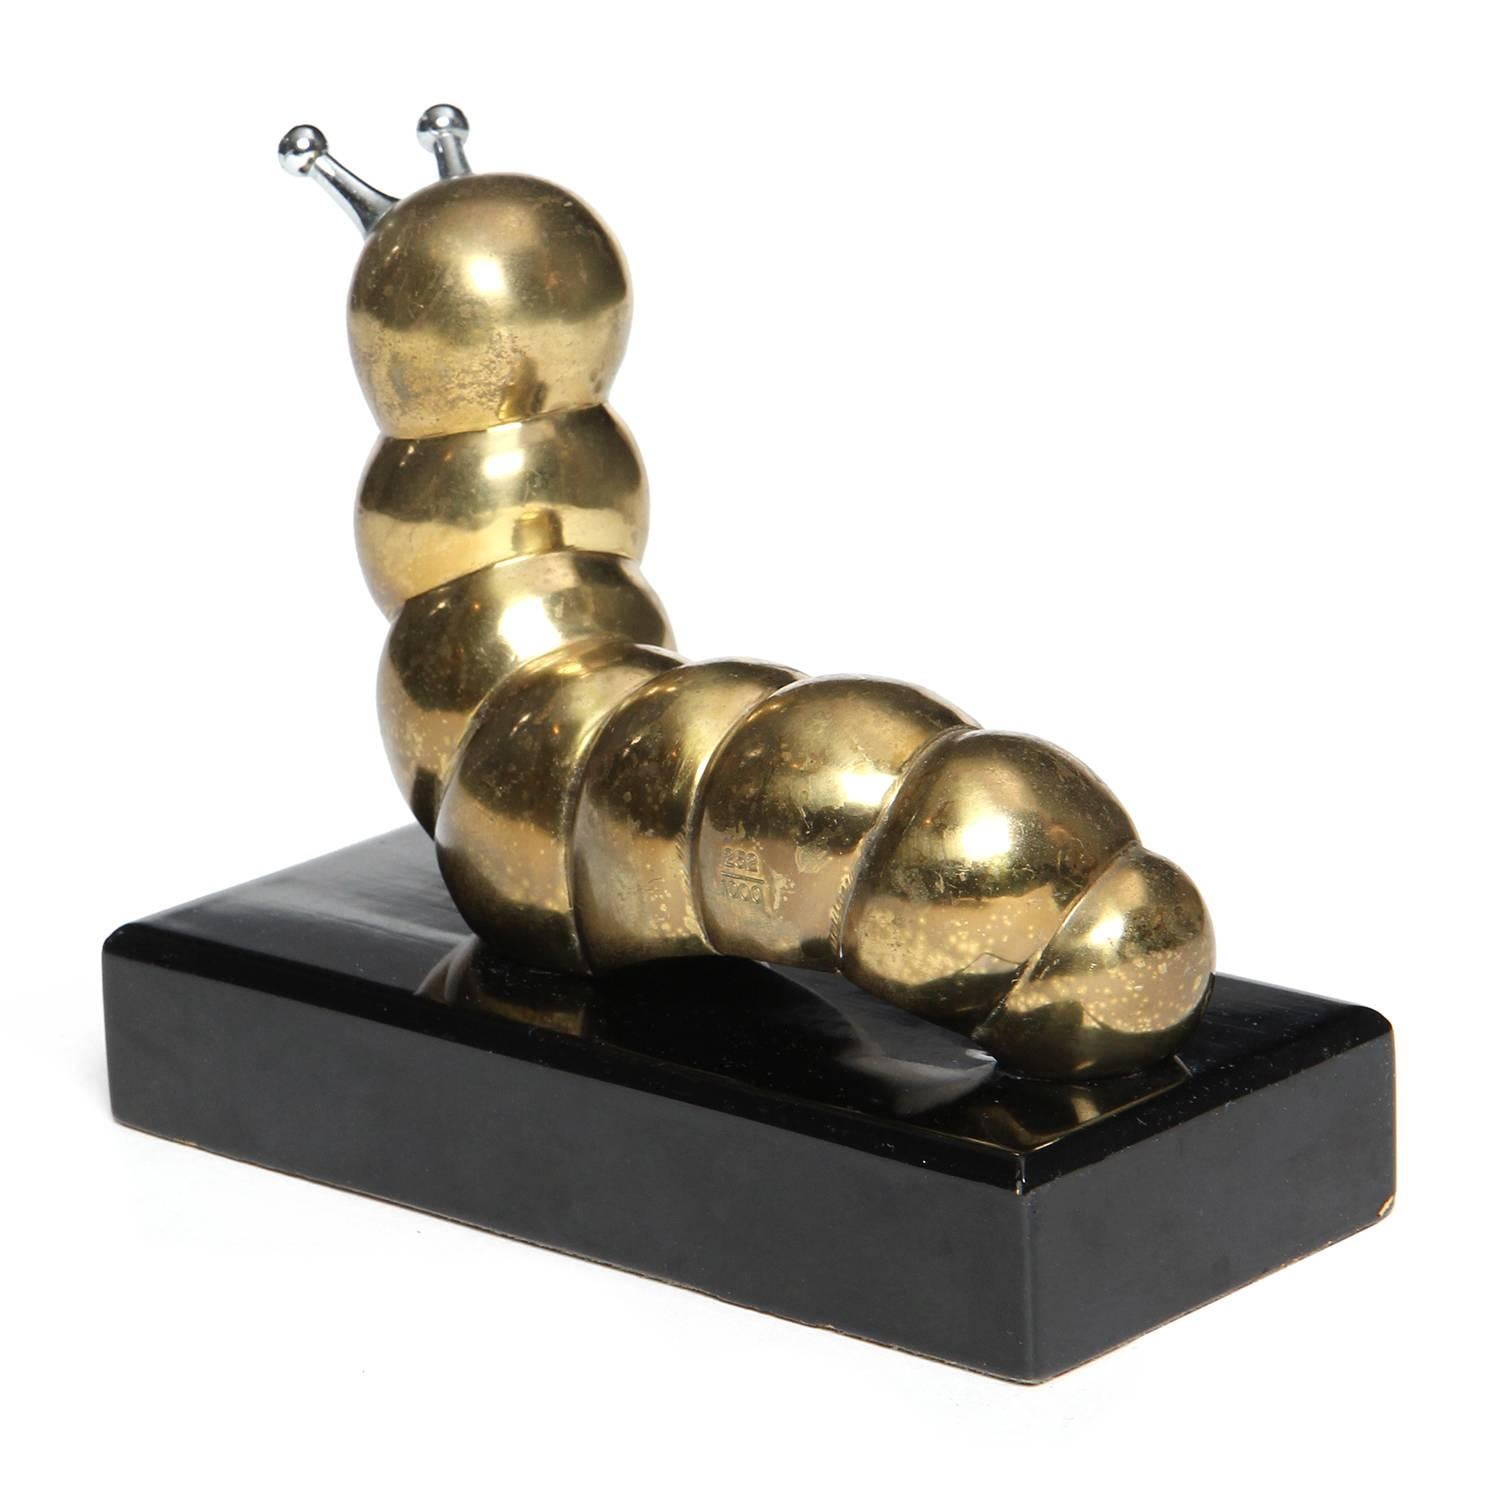 A delightful and unusual bronze and steel sculpture depicting a plump segmented caterpillar.